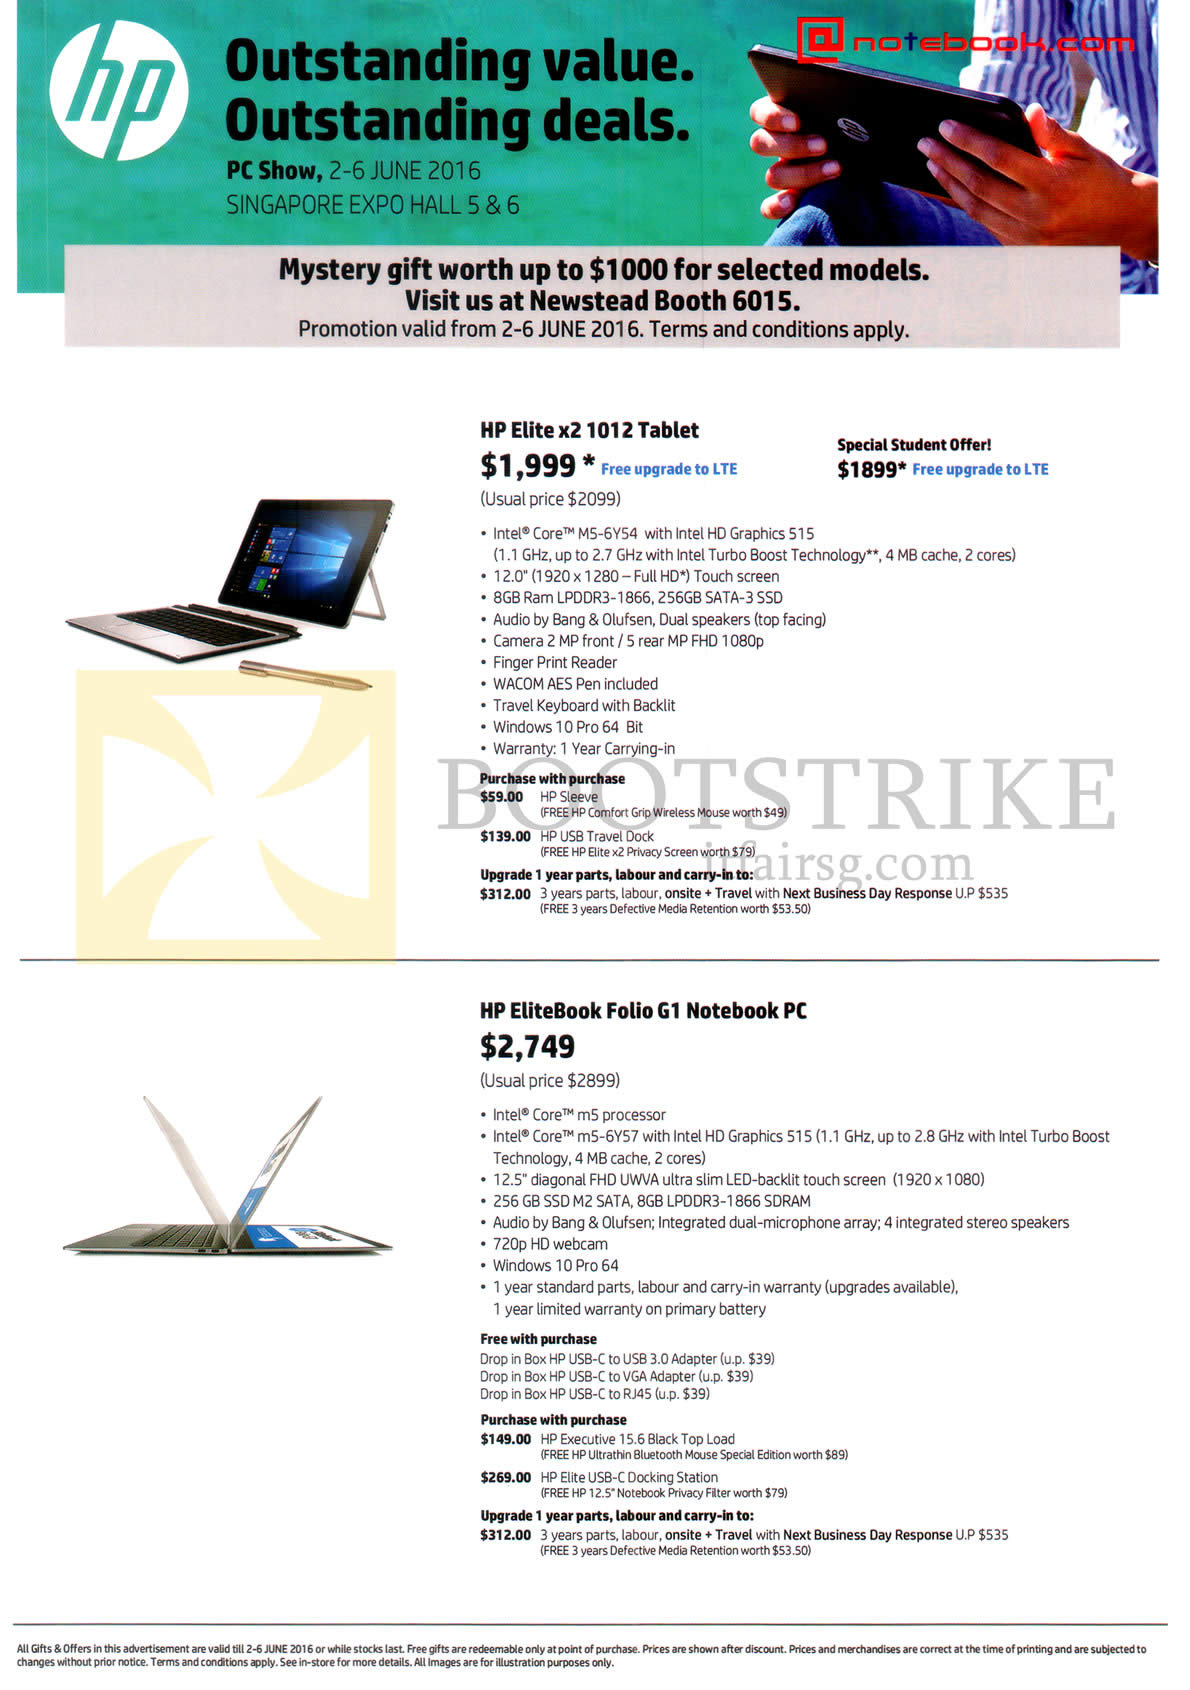 PC SHOW 2016 price list image brochure of HP Notebooks Elite X2 1012, EliteBook Folio G1